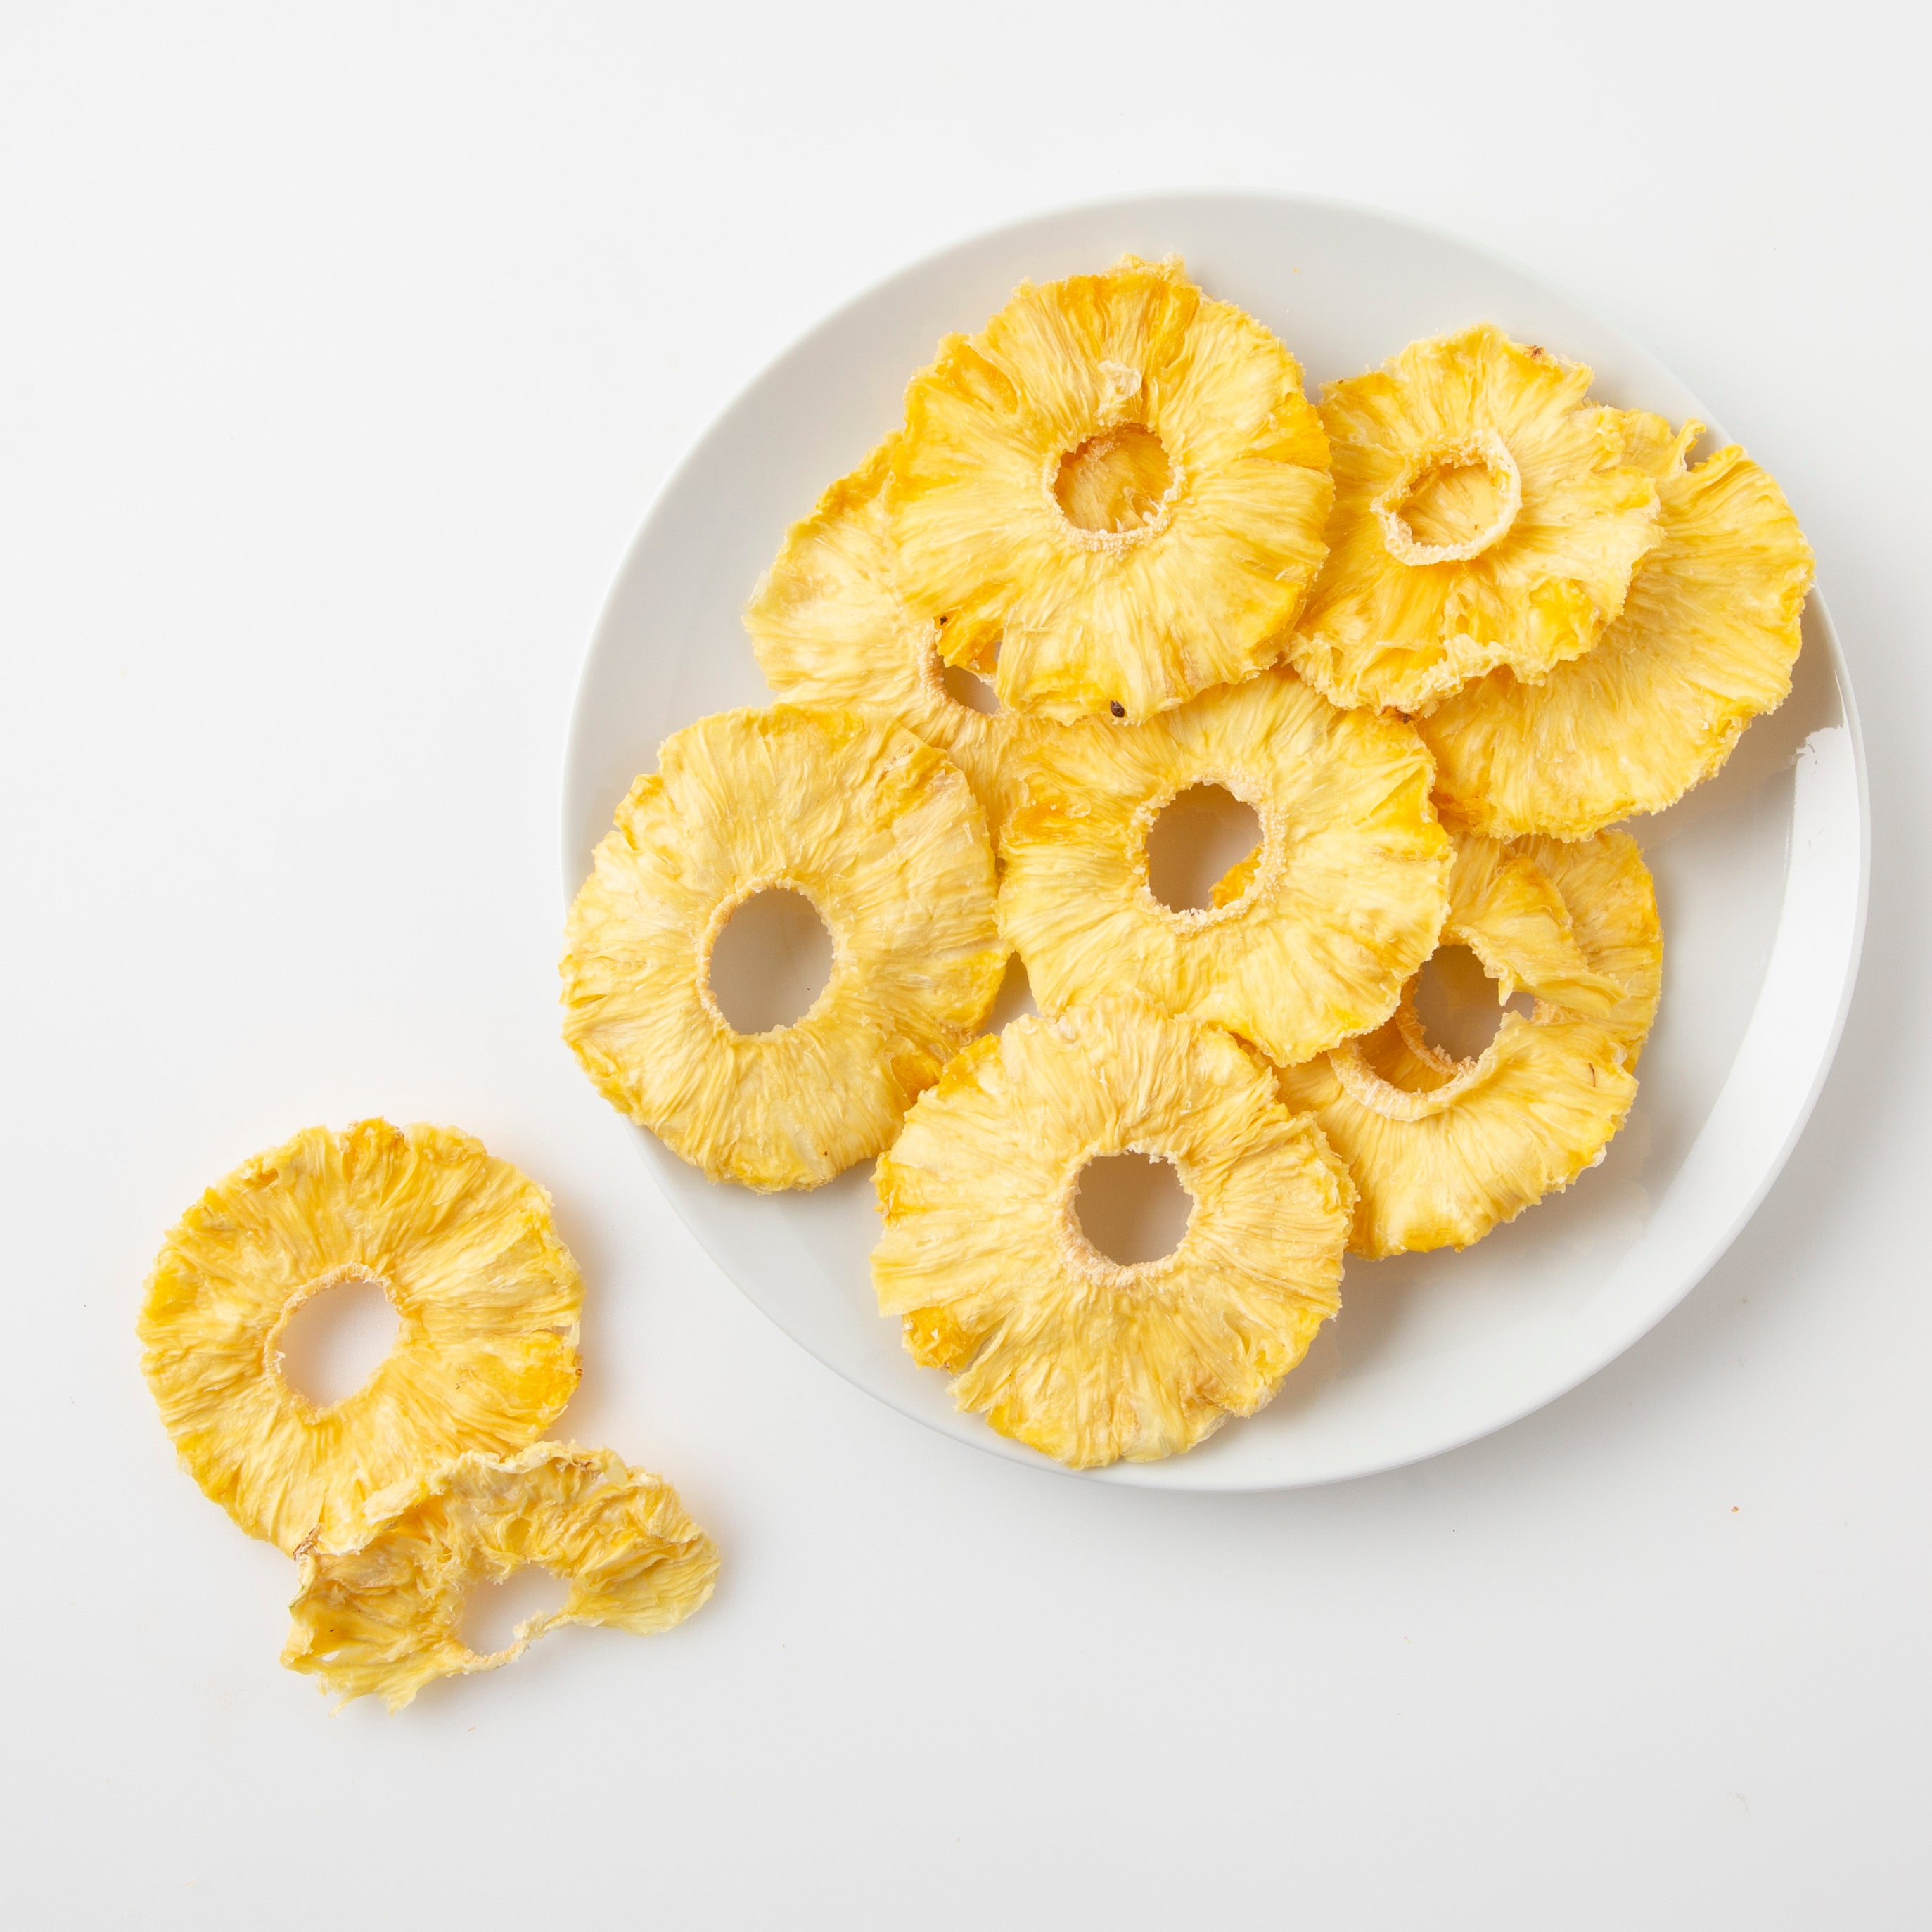 Dried Australian Pineapple (Dried Fruits) Image 2 - Naked Foods